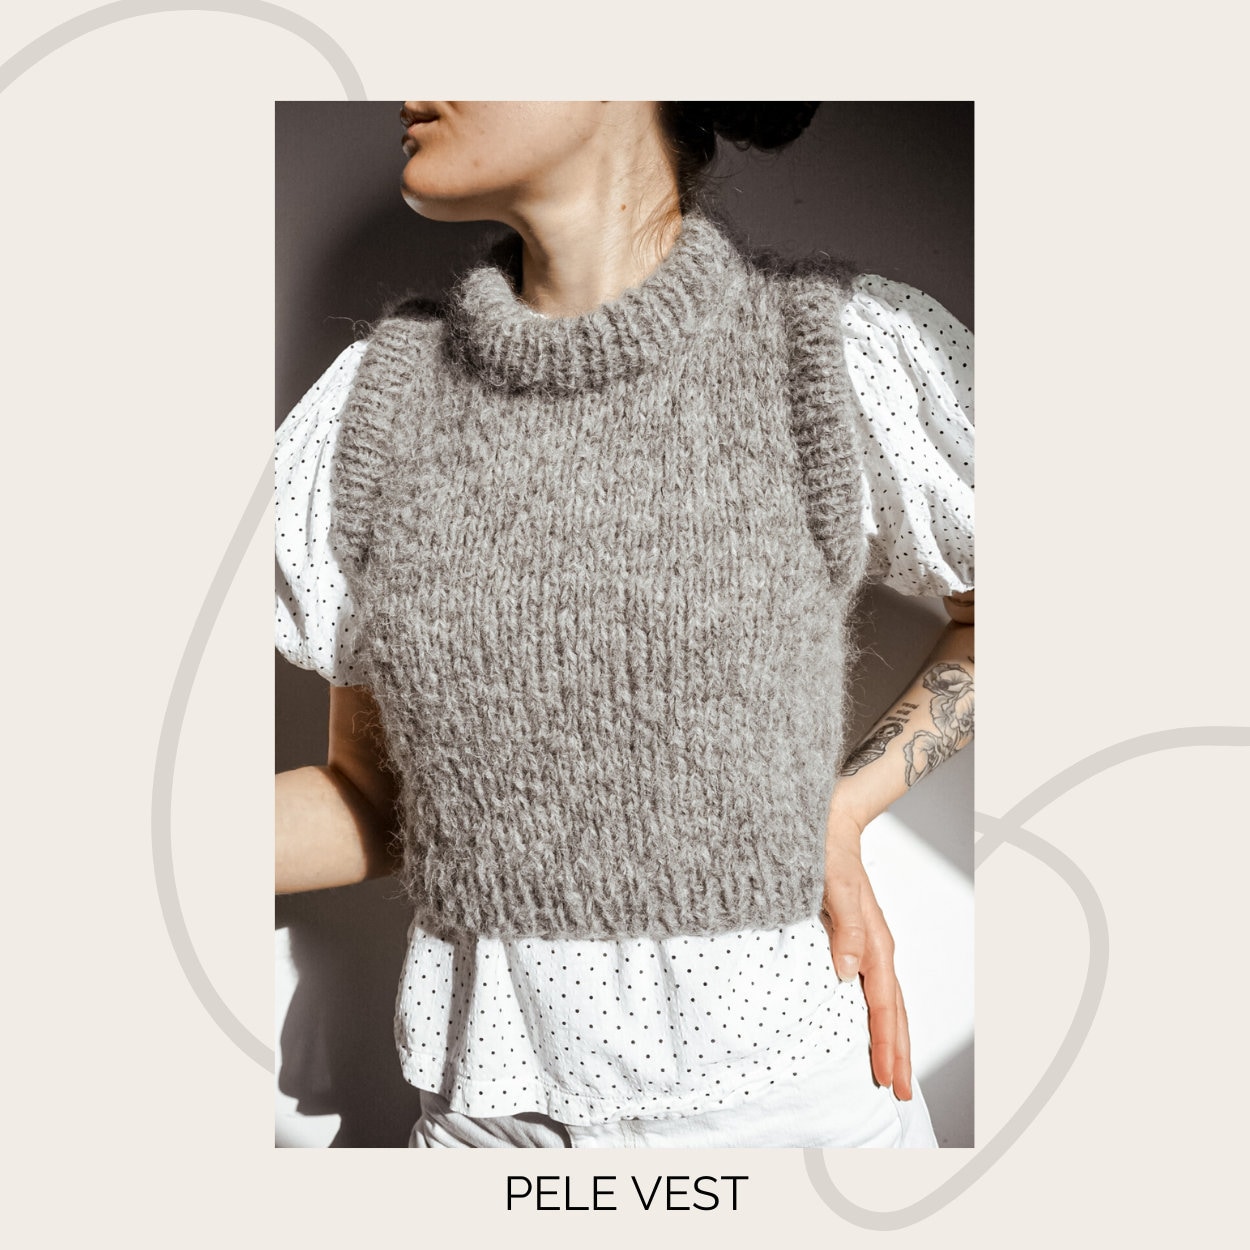 Kleding Dameskleding Sweaters Spencers PELE vest-sweater vest-cropped vest-grijs vest-chunky wollen vest-vest-vest-alpacawol vest-donzig vest-gebreide top-lente trui 